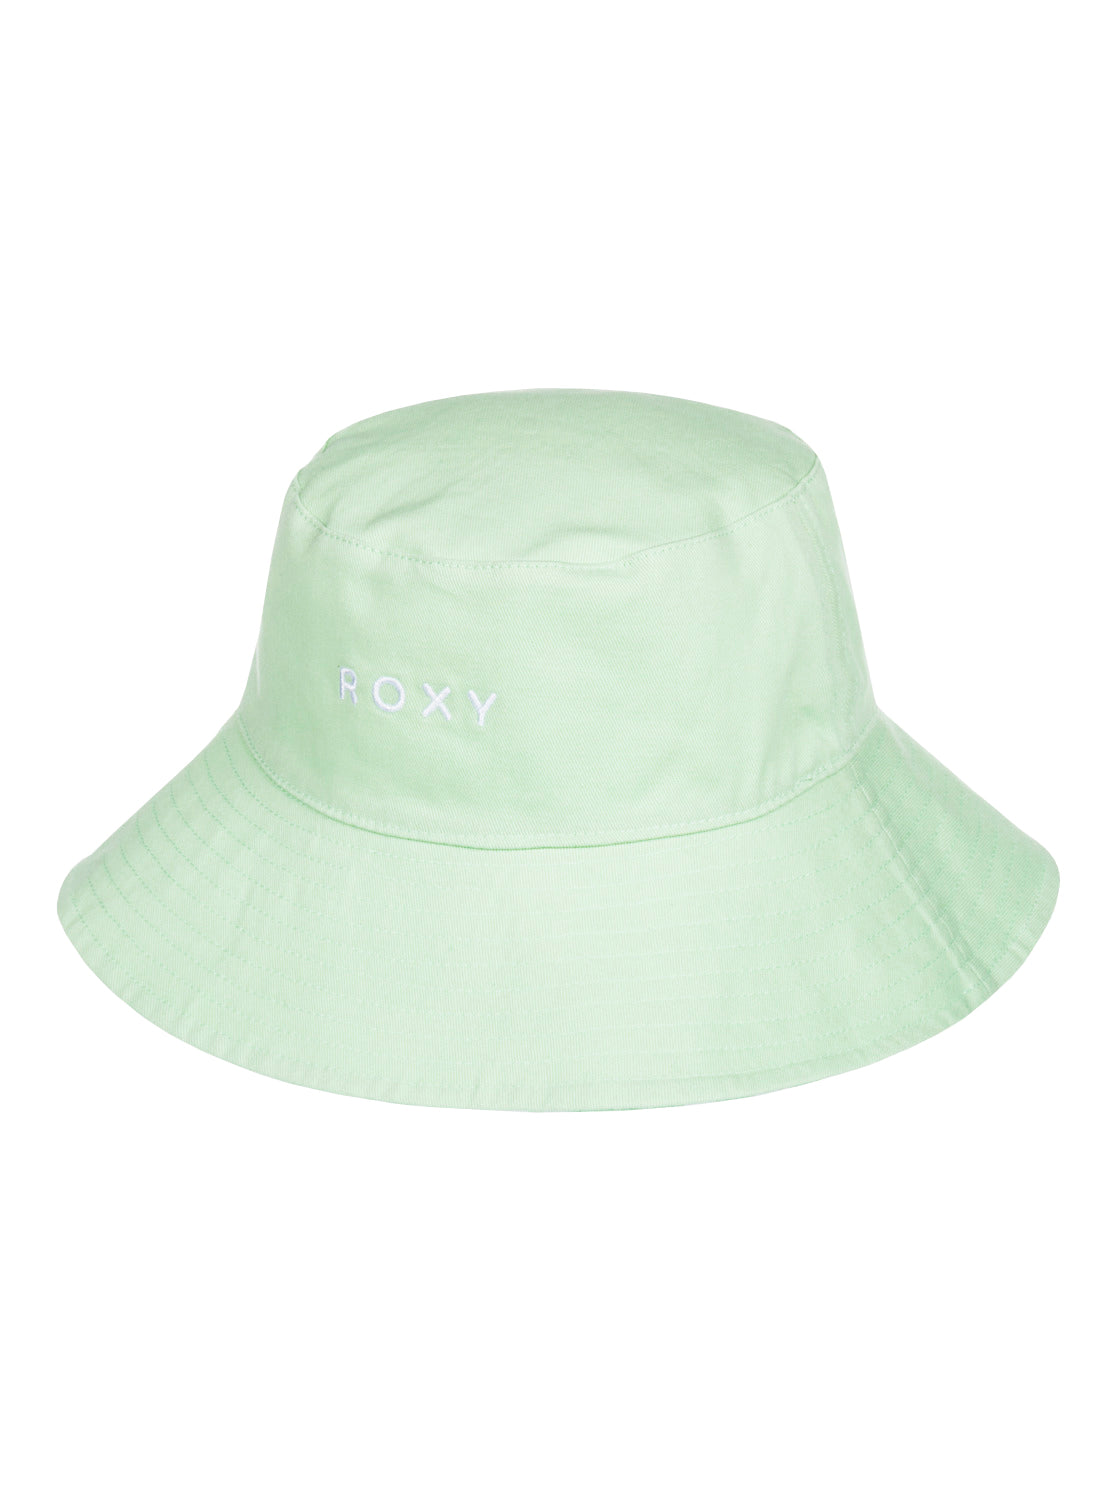 Roxy Aloha Sunshine Printed Bucket Hat  GFE6-Spruce M/L